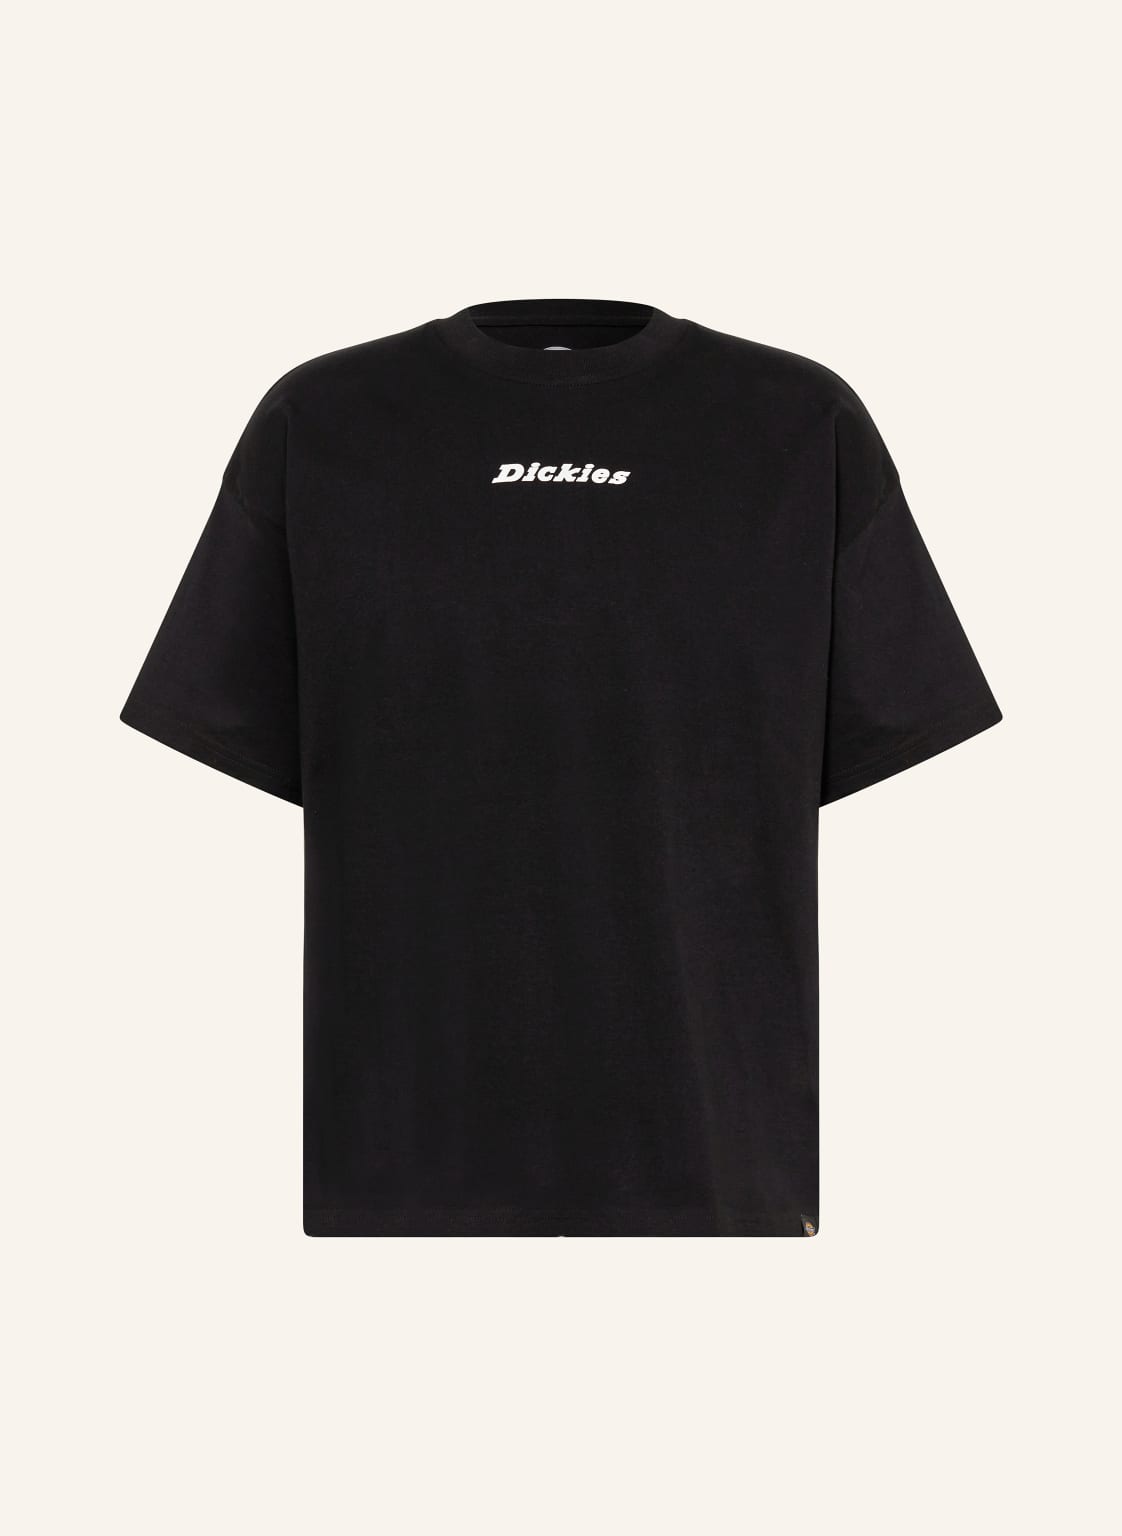 Dickies T-Shirt schwarz von Dickies